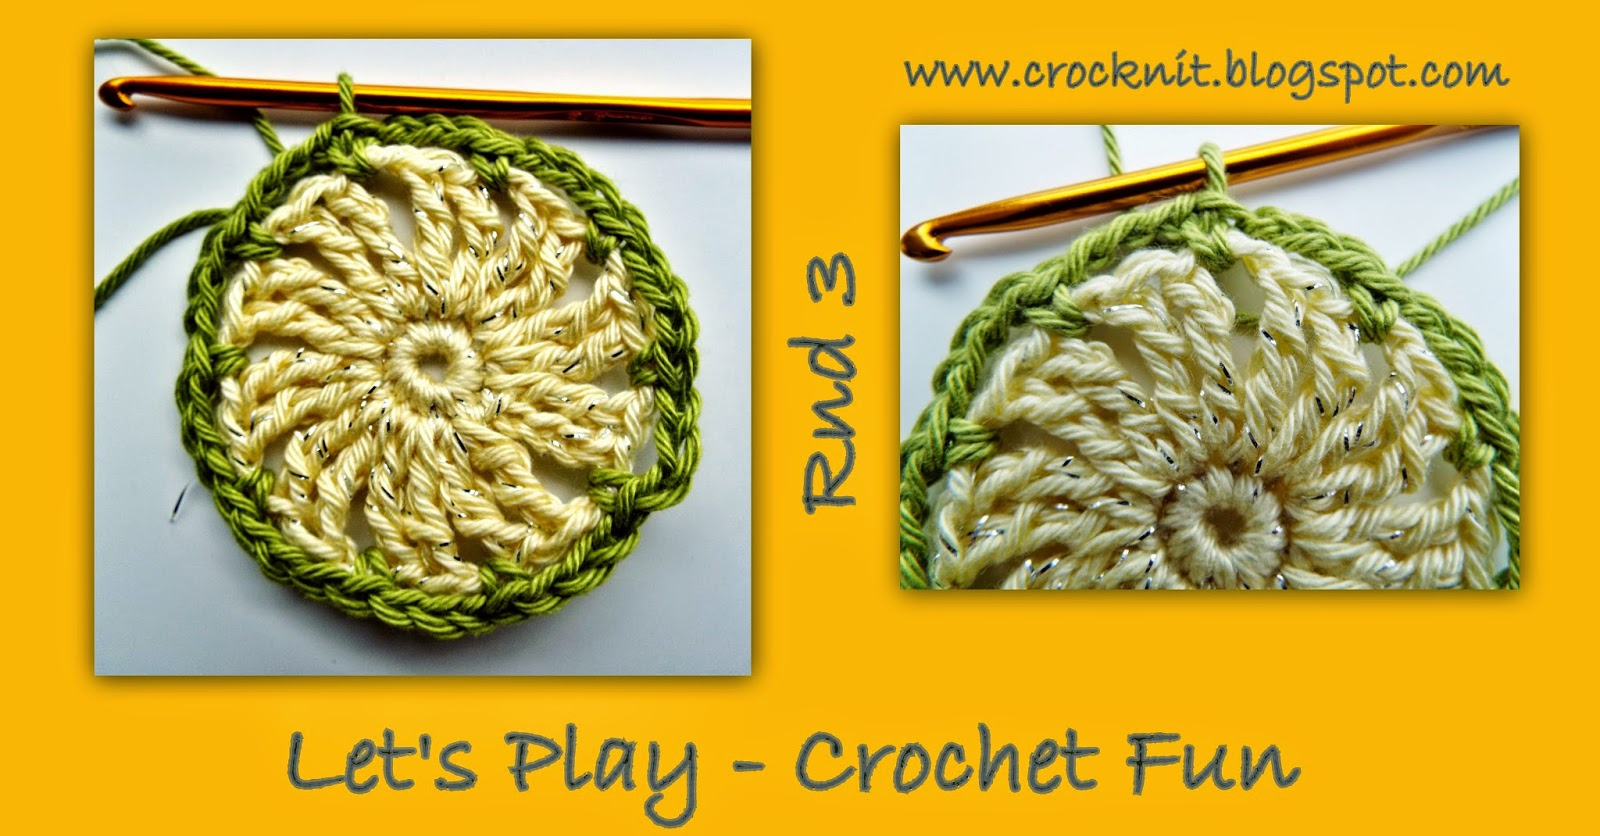 Crochet Home Decor Free Patterns Microcknit Creations Lets Play Crochet Fun Free Pattern